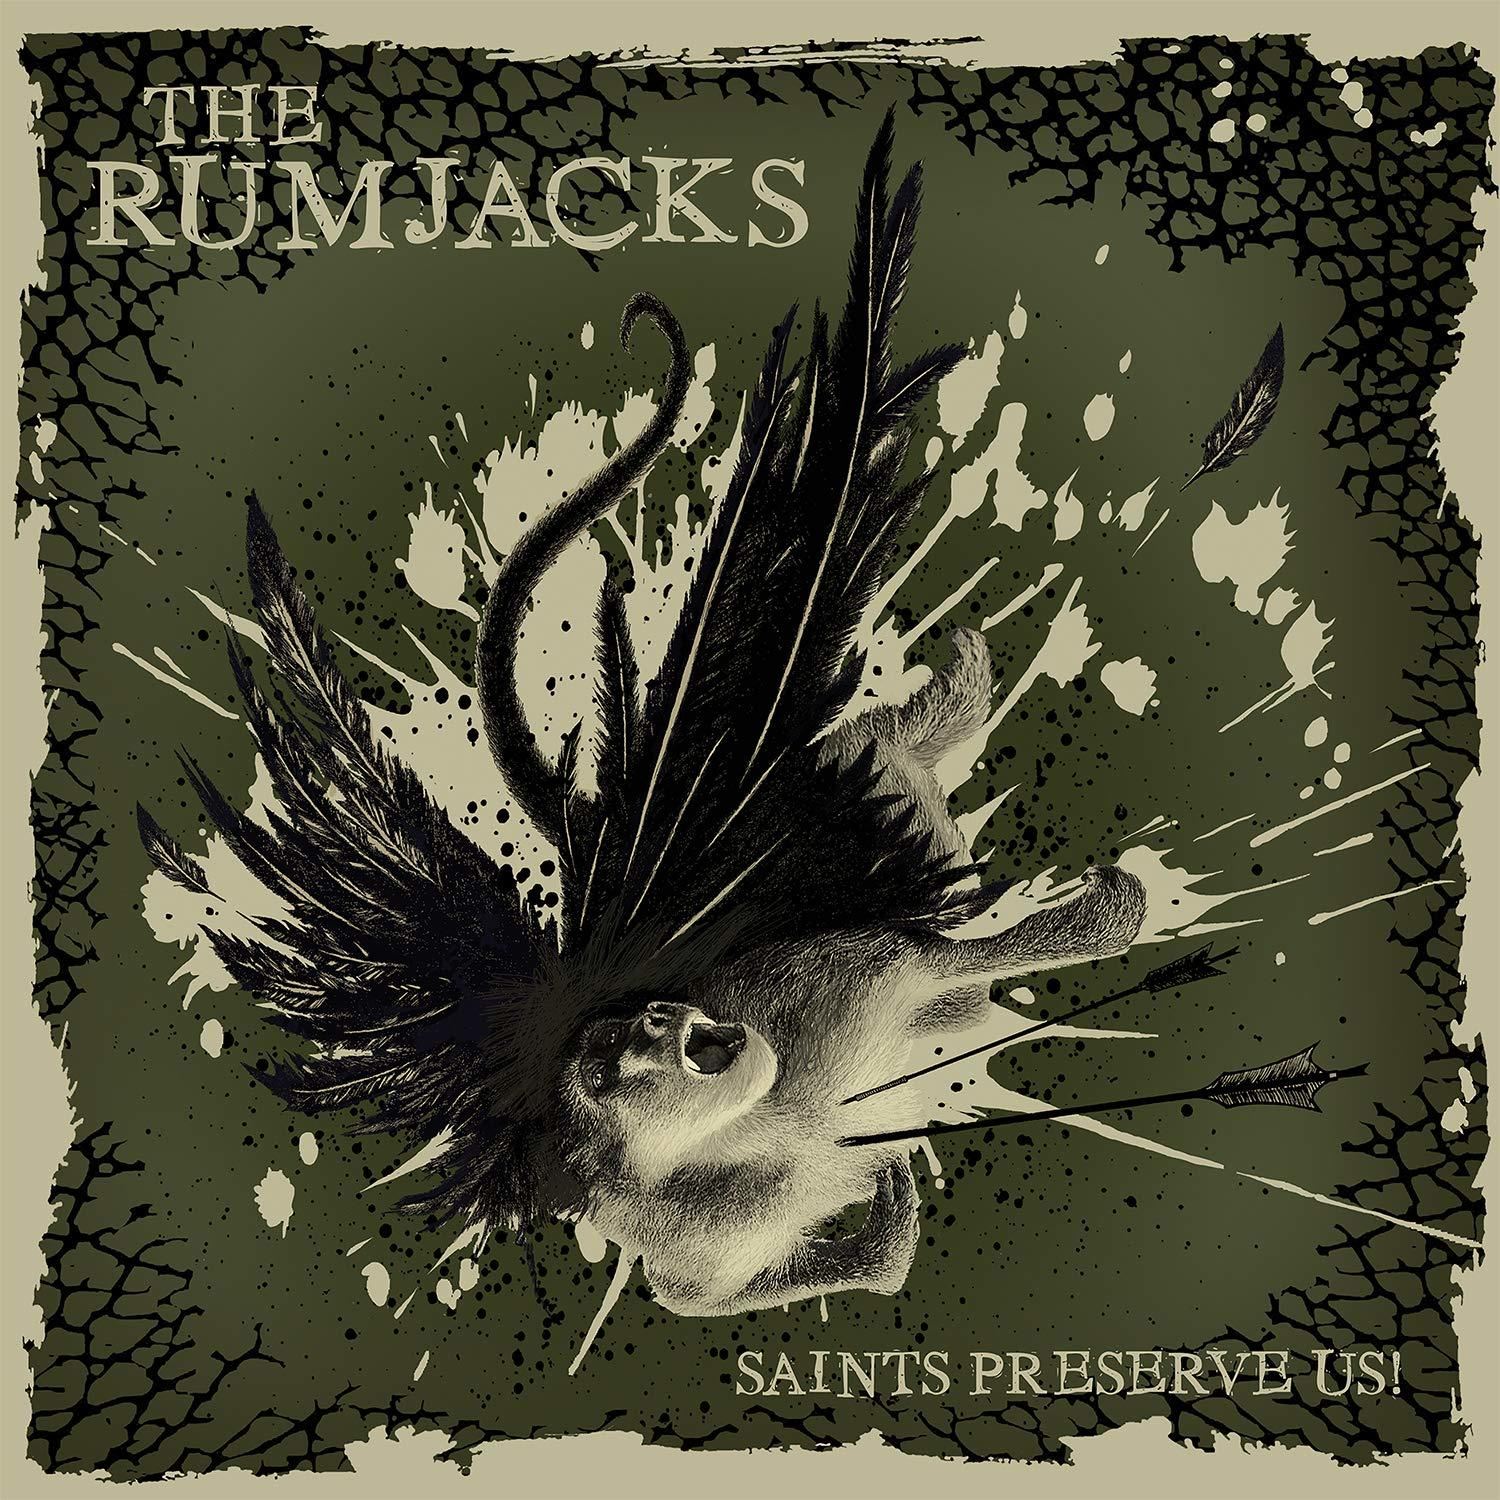 The Rumjacks - (Vinyl) - Preserve Saints Us